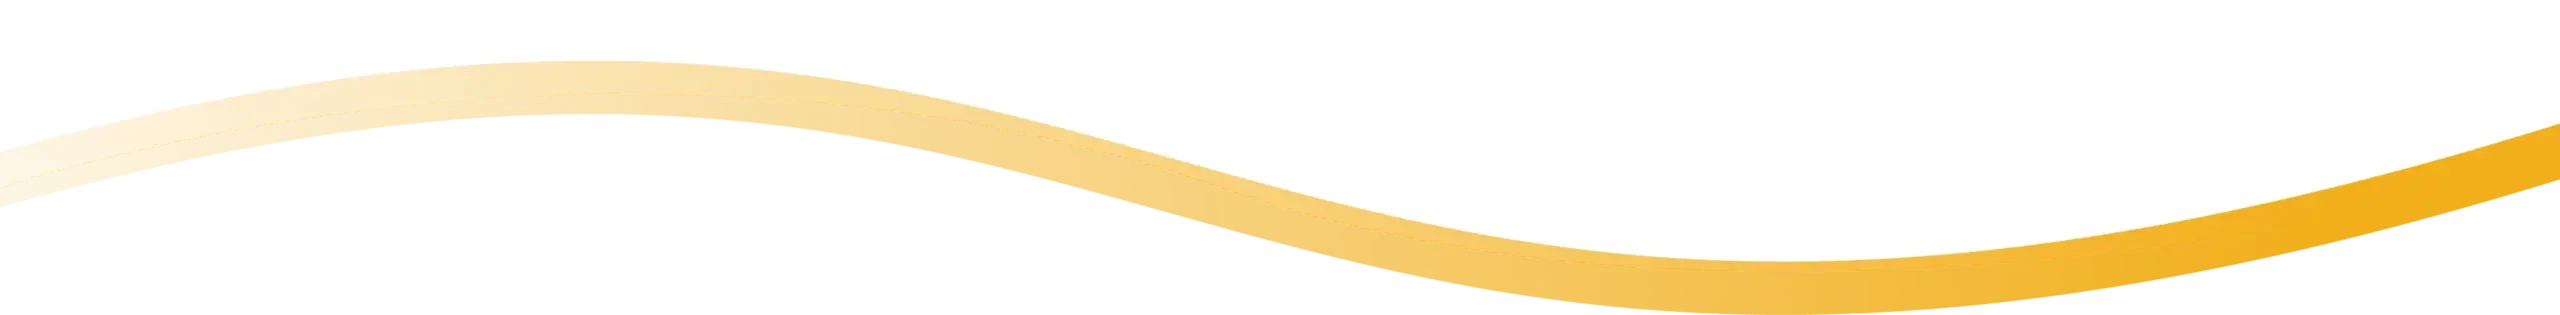 Sapientis-yellow-ribbon-elements